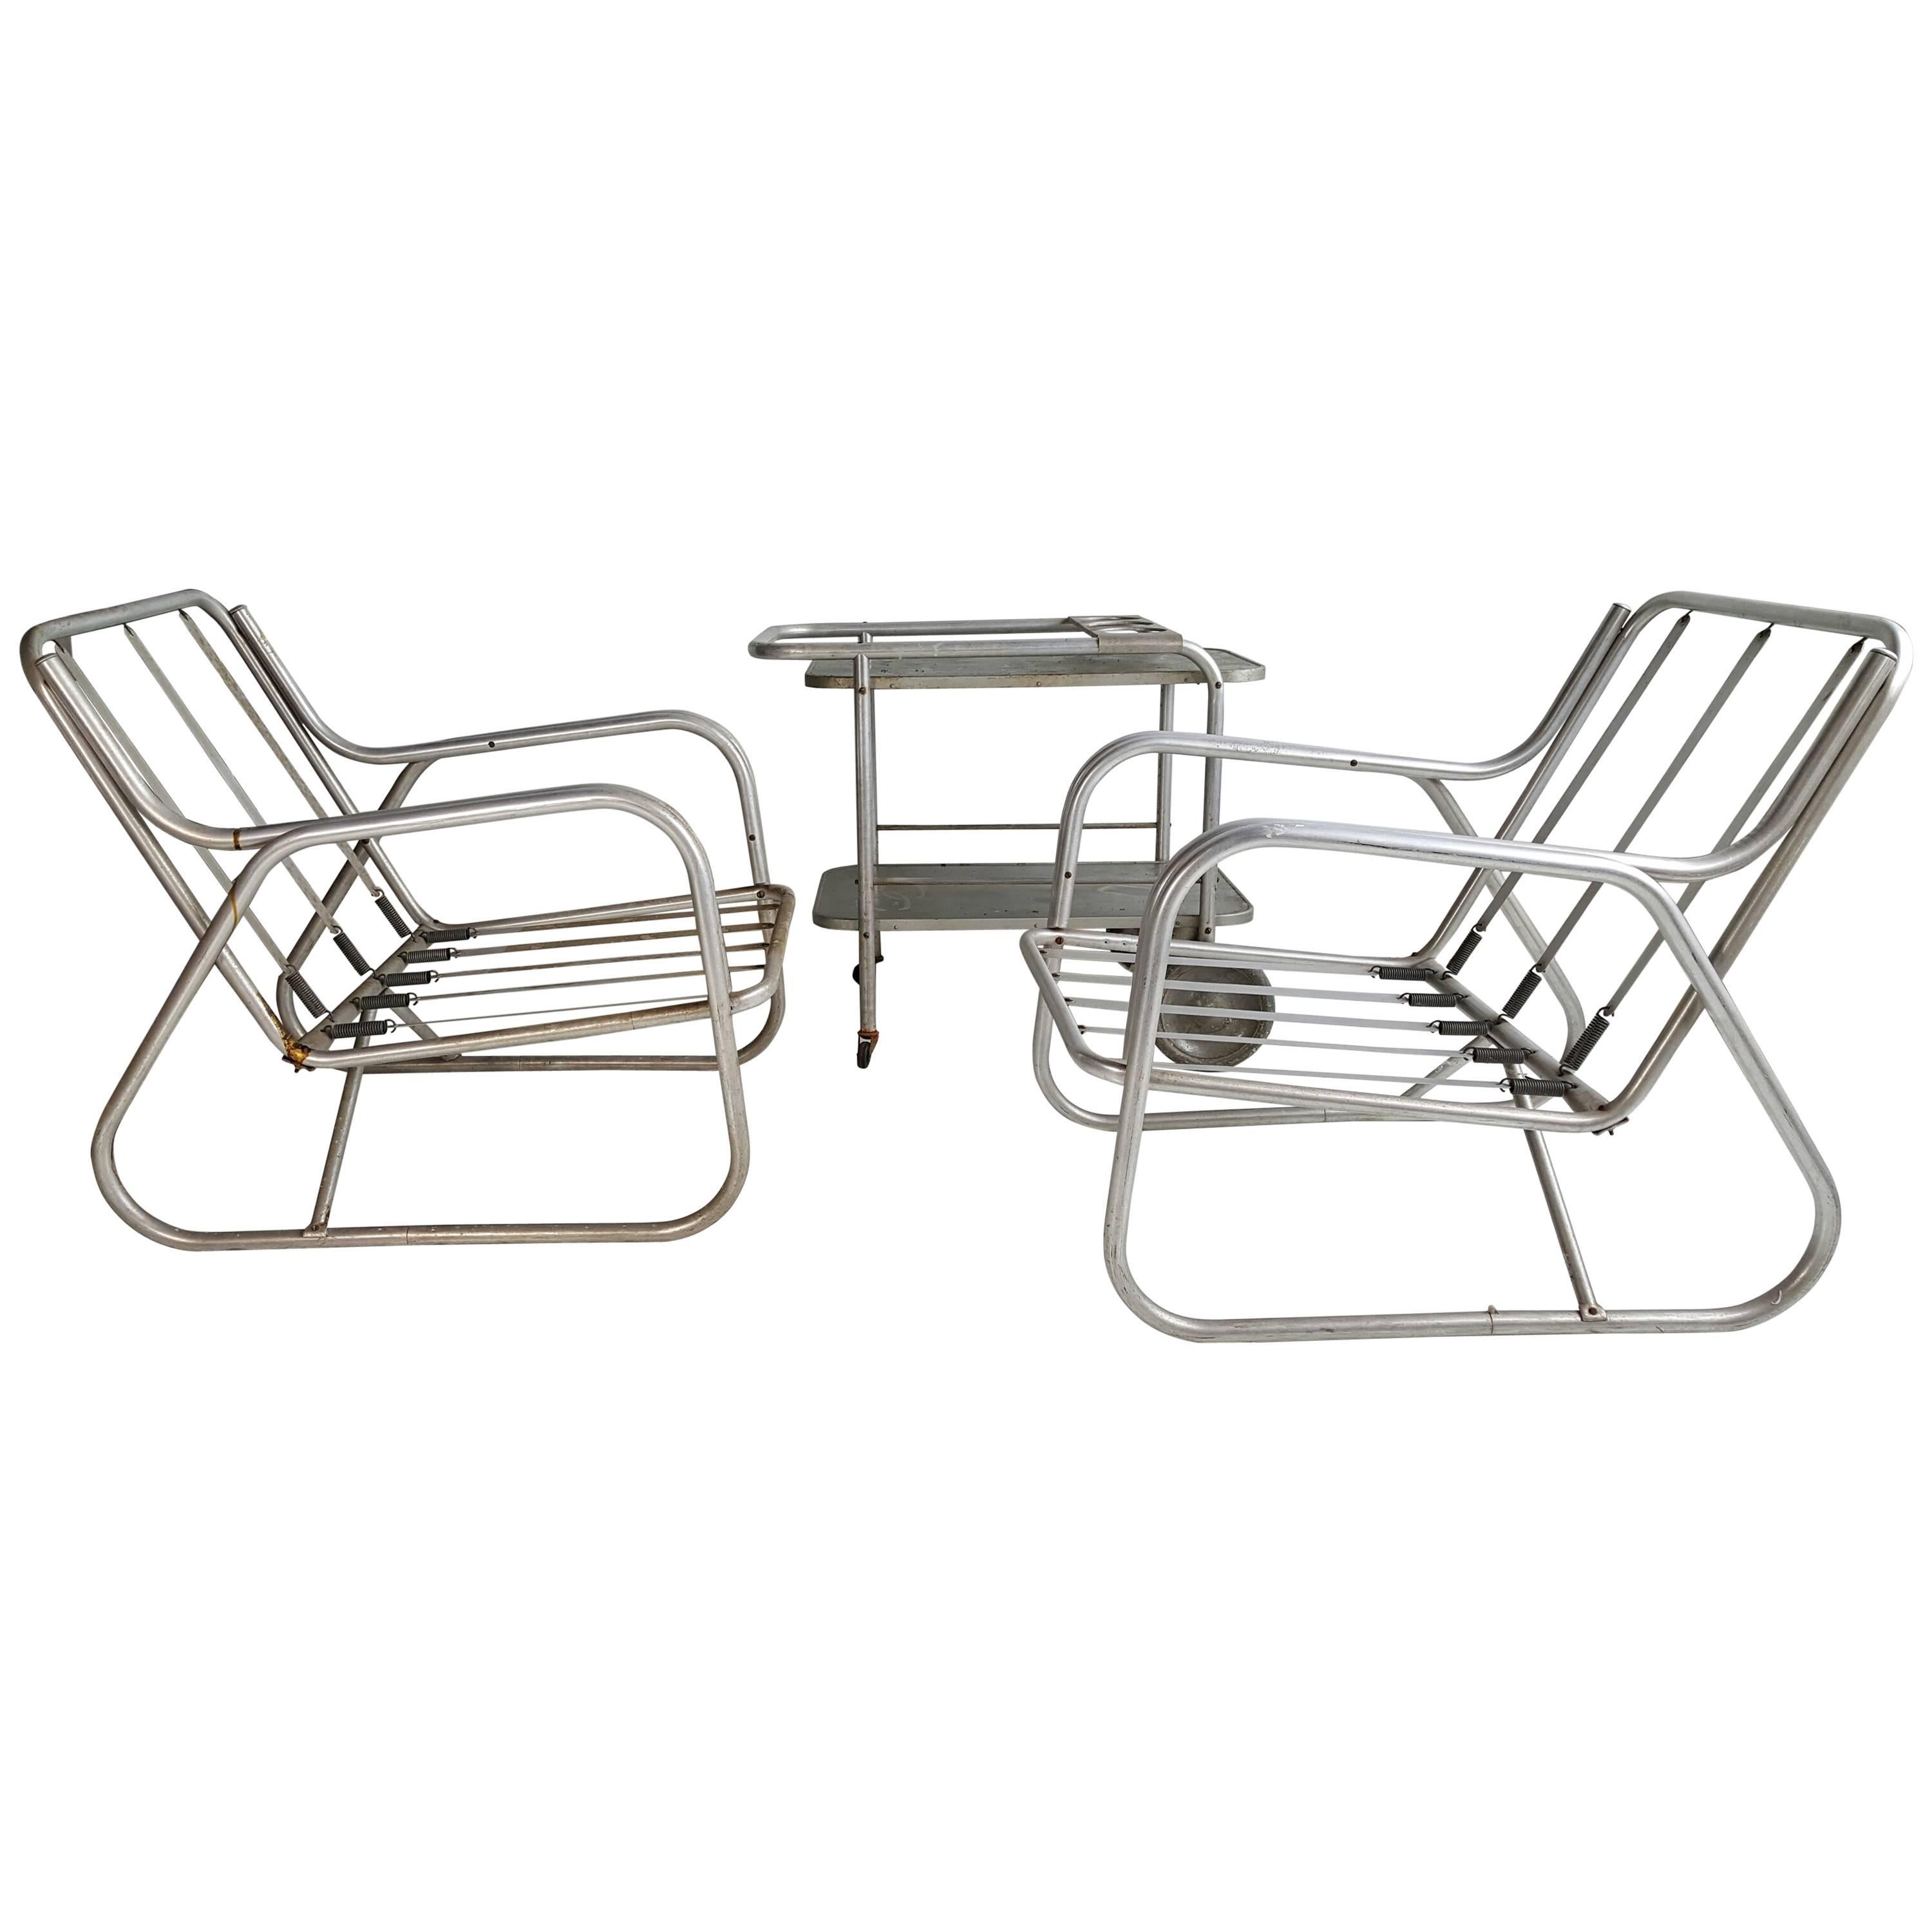 Art Deco or Machine Age Three-Piece Aluminum Outdoor Patio Set, Chairs, Bar Cart